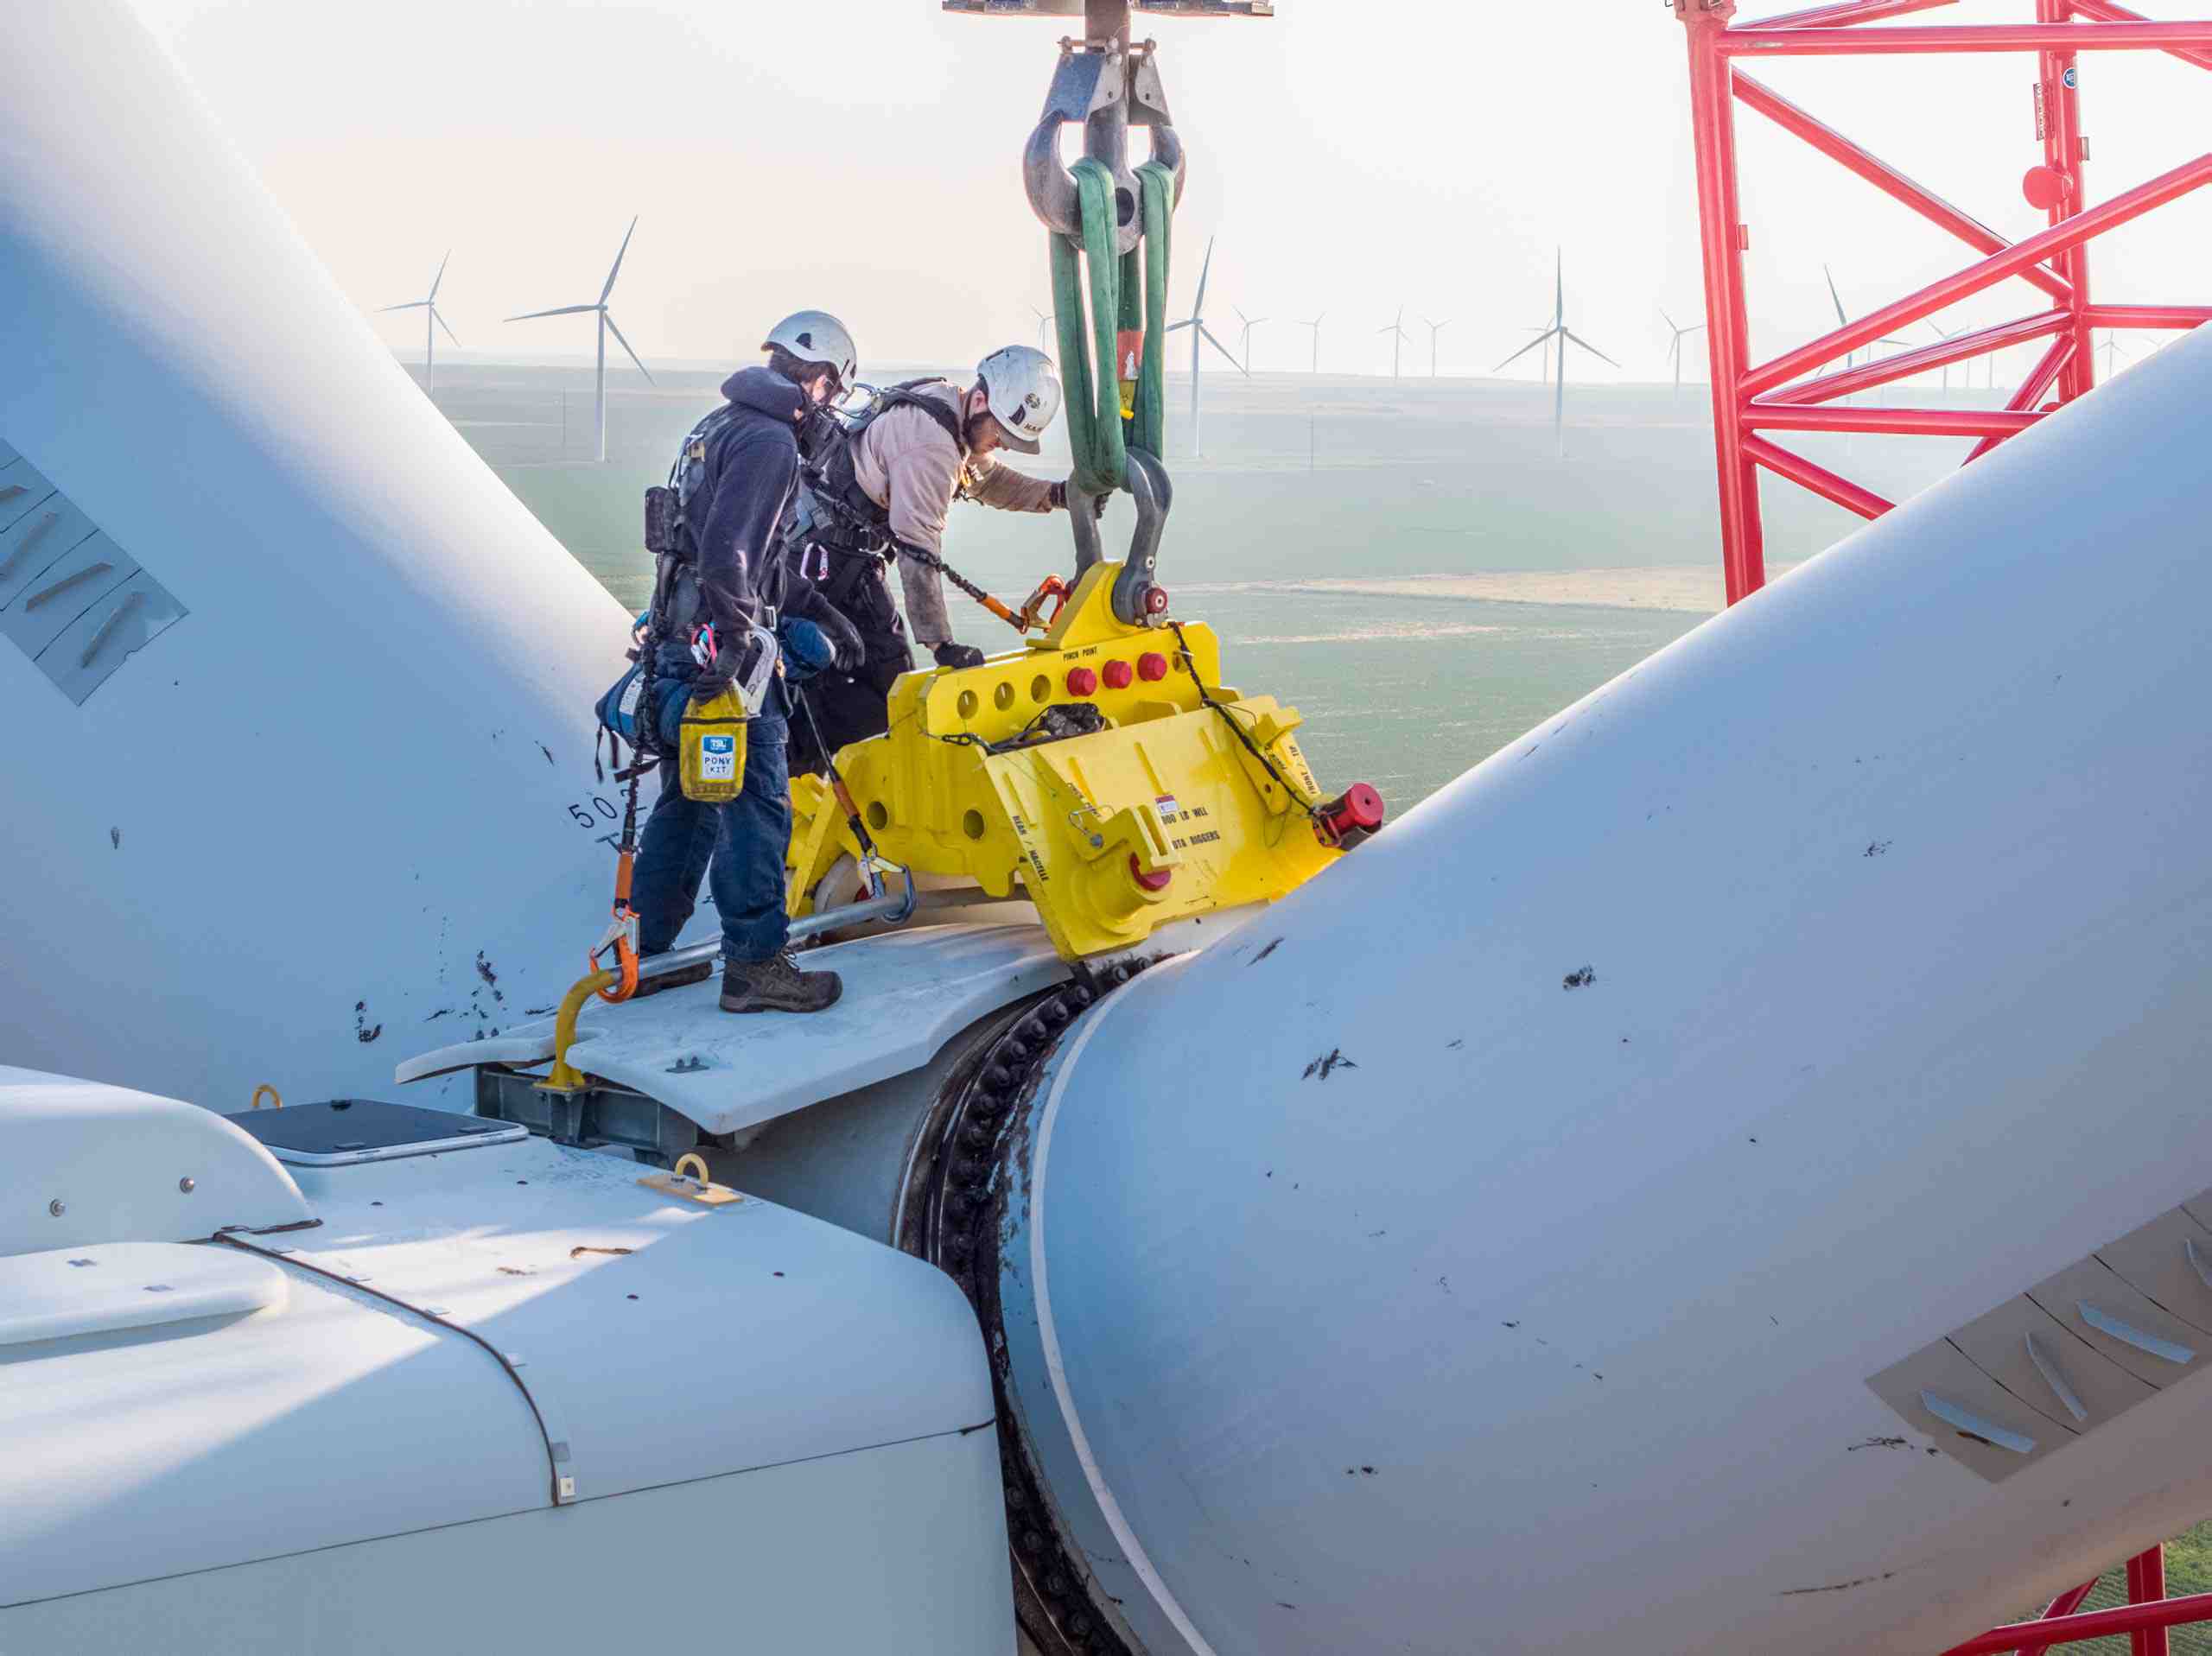 Best drone shots of techs working atop of wind turbine